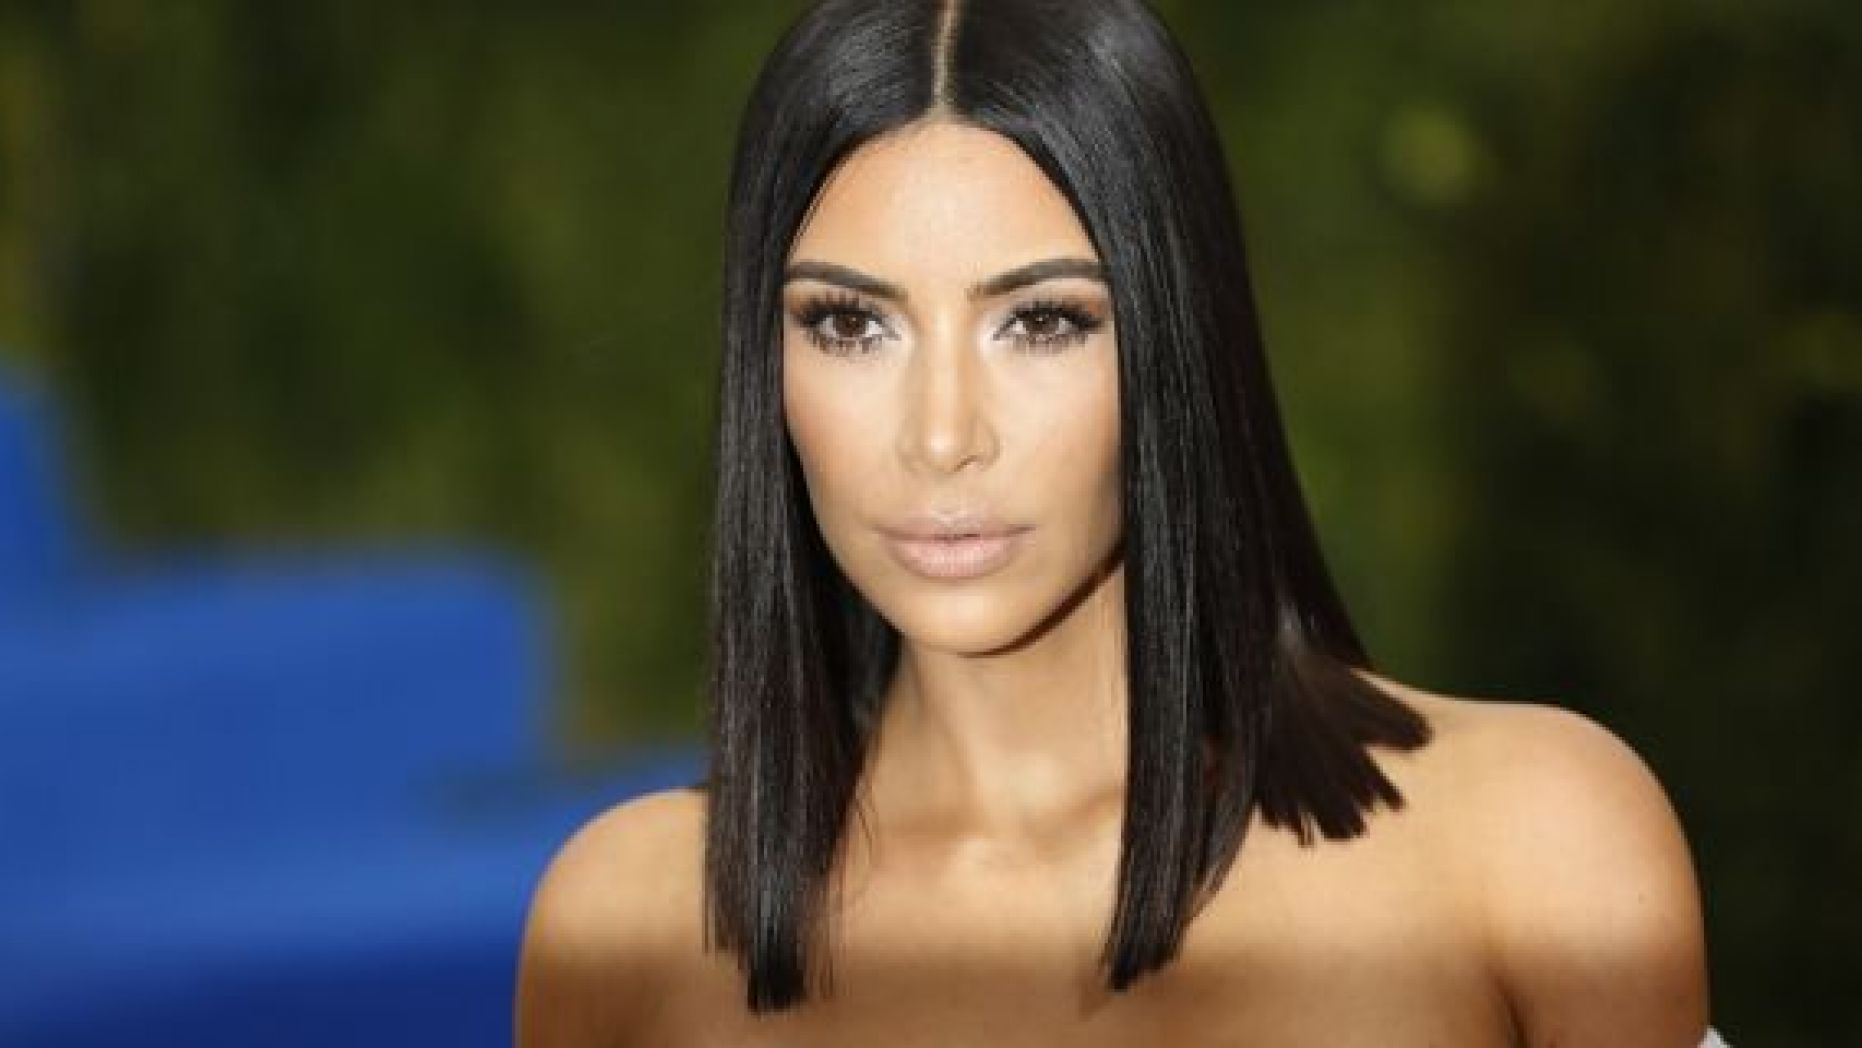 Kim Kardashian shares yet another racy photo of herself on social media. 